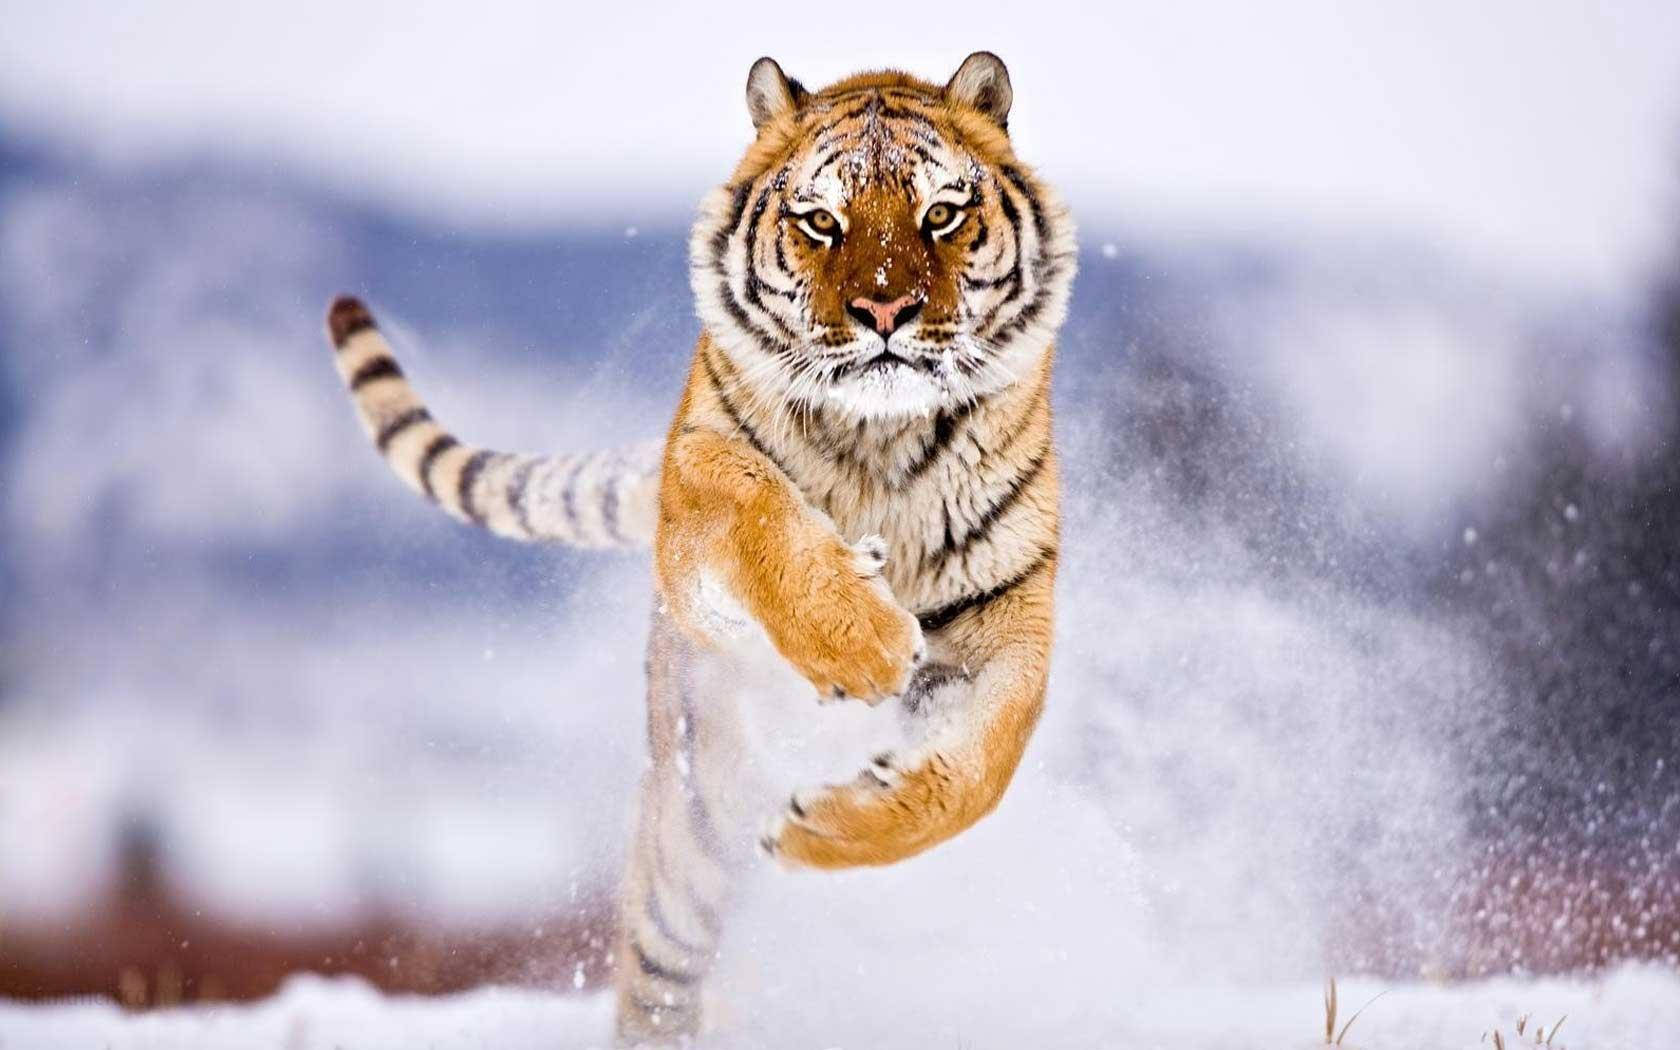 Tiger Animal Running In Snow